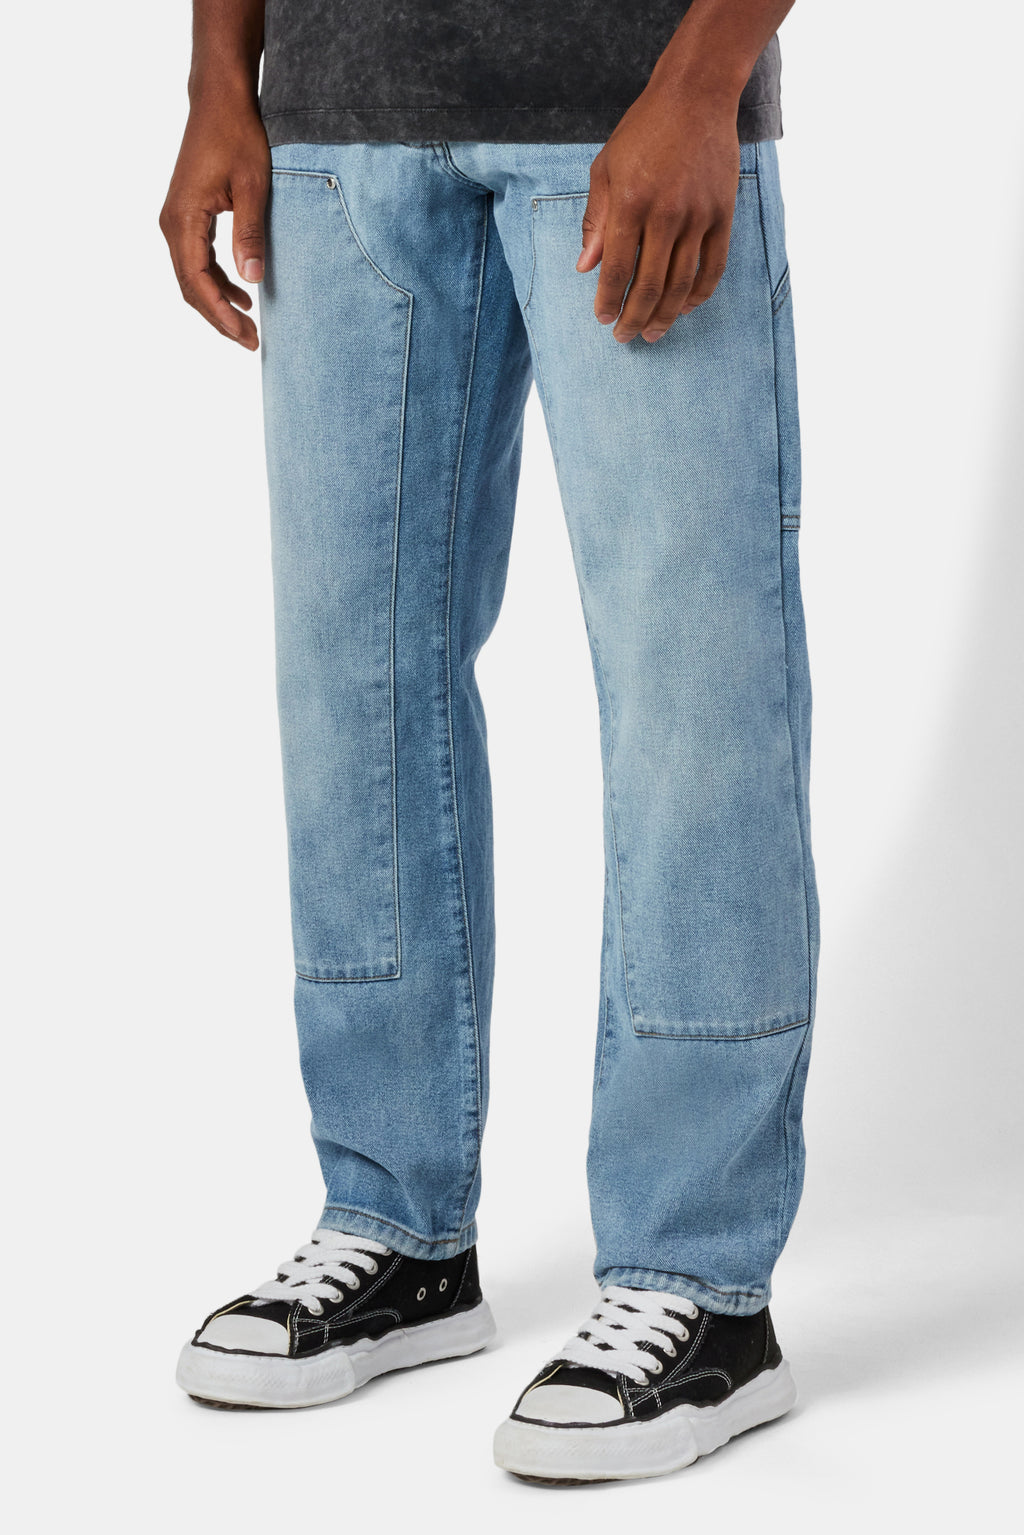 Carpenter Jeans - Light Blue | Mens Denim | Shop Jeans at CERNUCCI.COM ...